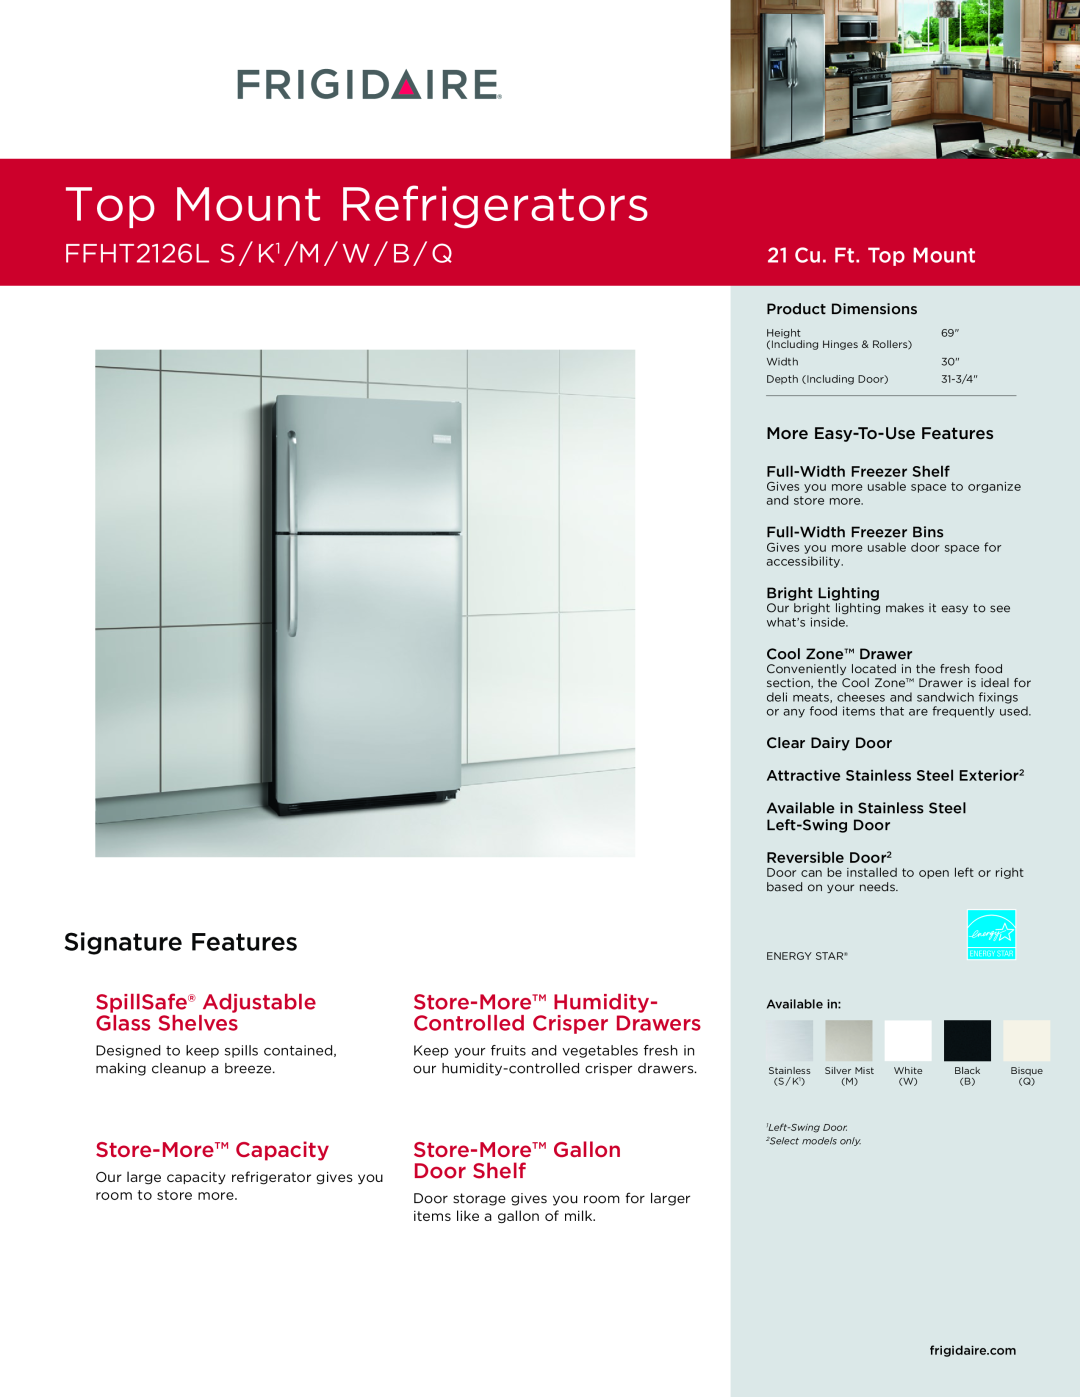 Frigidaire dimensions Top Mount Refrigerators, FFHT2126L S / K1/M / W / b / Q, Signature Features, 21 Cu. Ft. Top Mount 